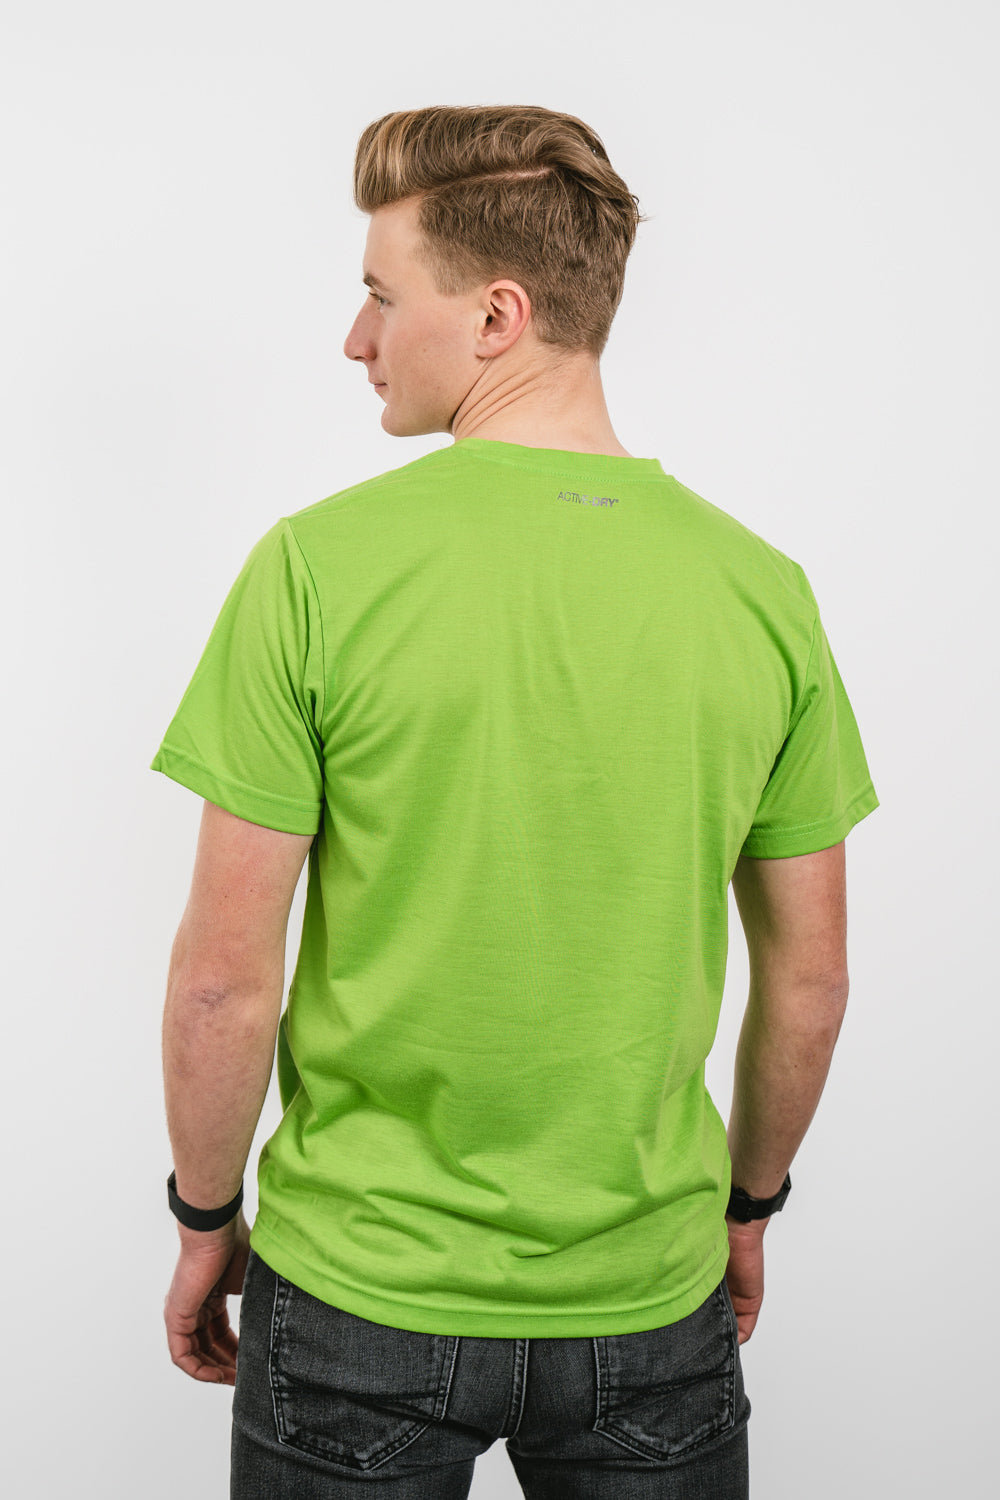 Outdooractive Pro+ T-shirt green - men